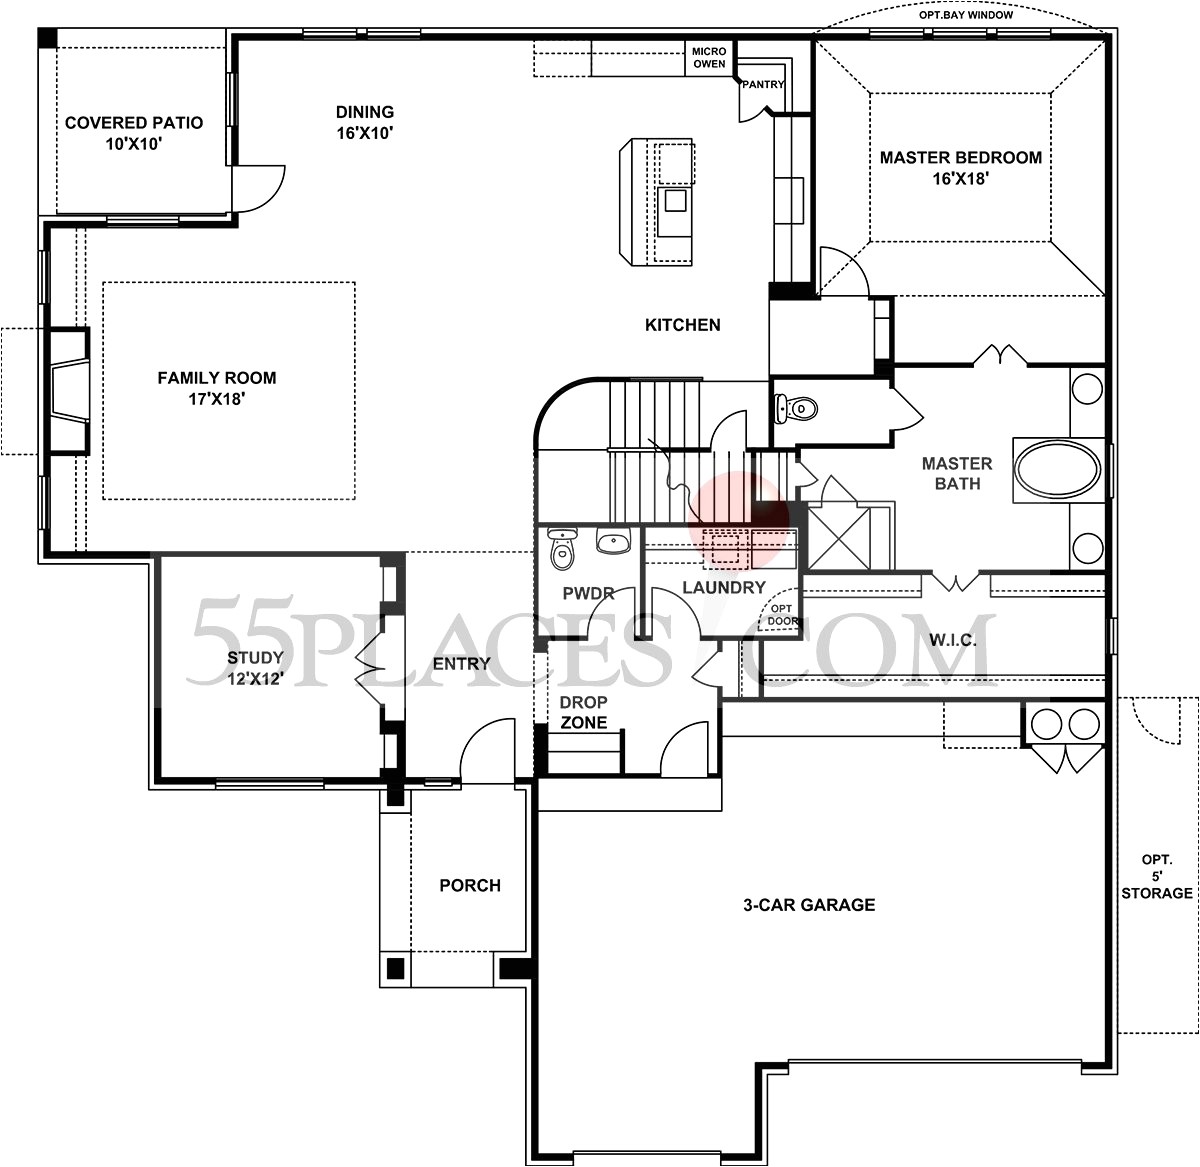 scott felder homes floor plans best of home design open floor plan design for scott felder homes with